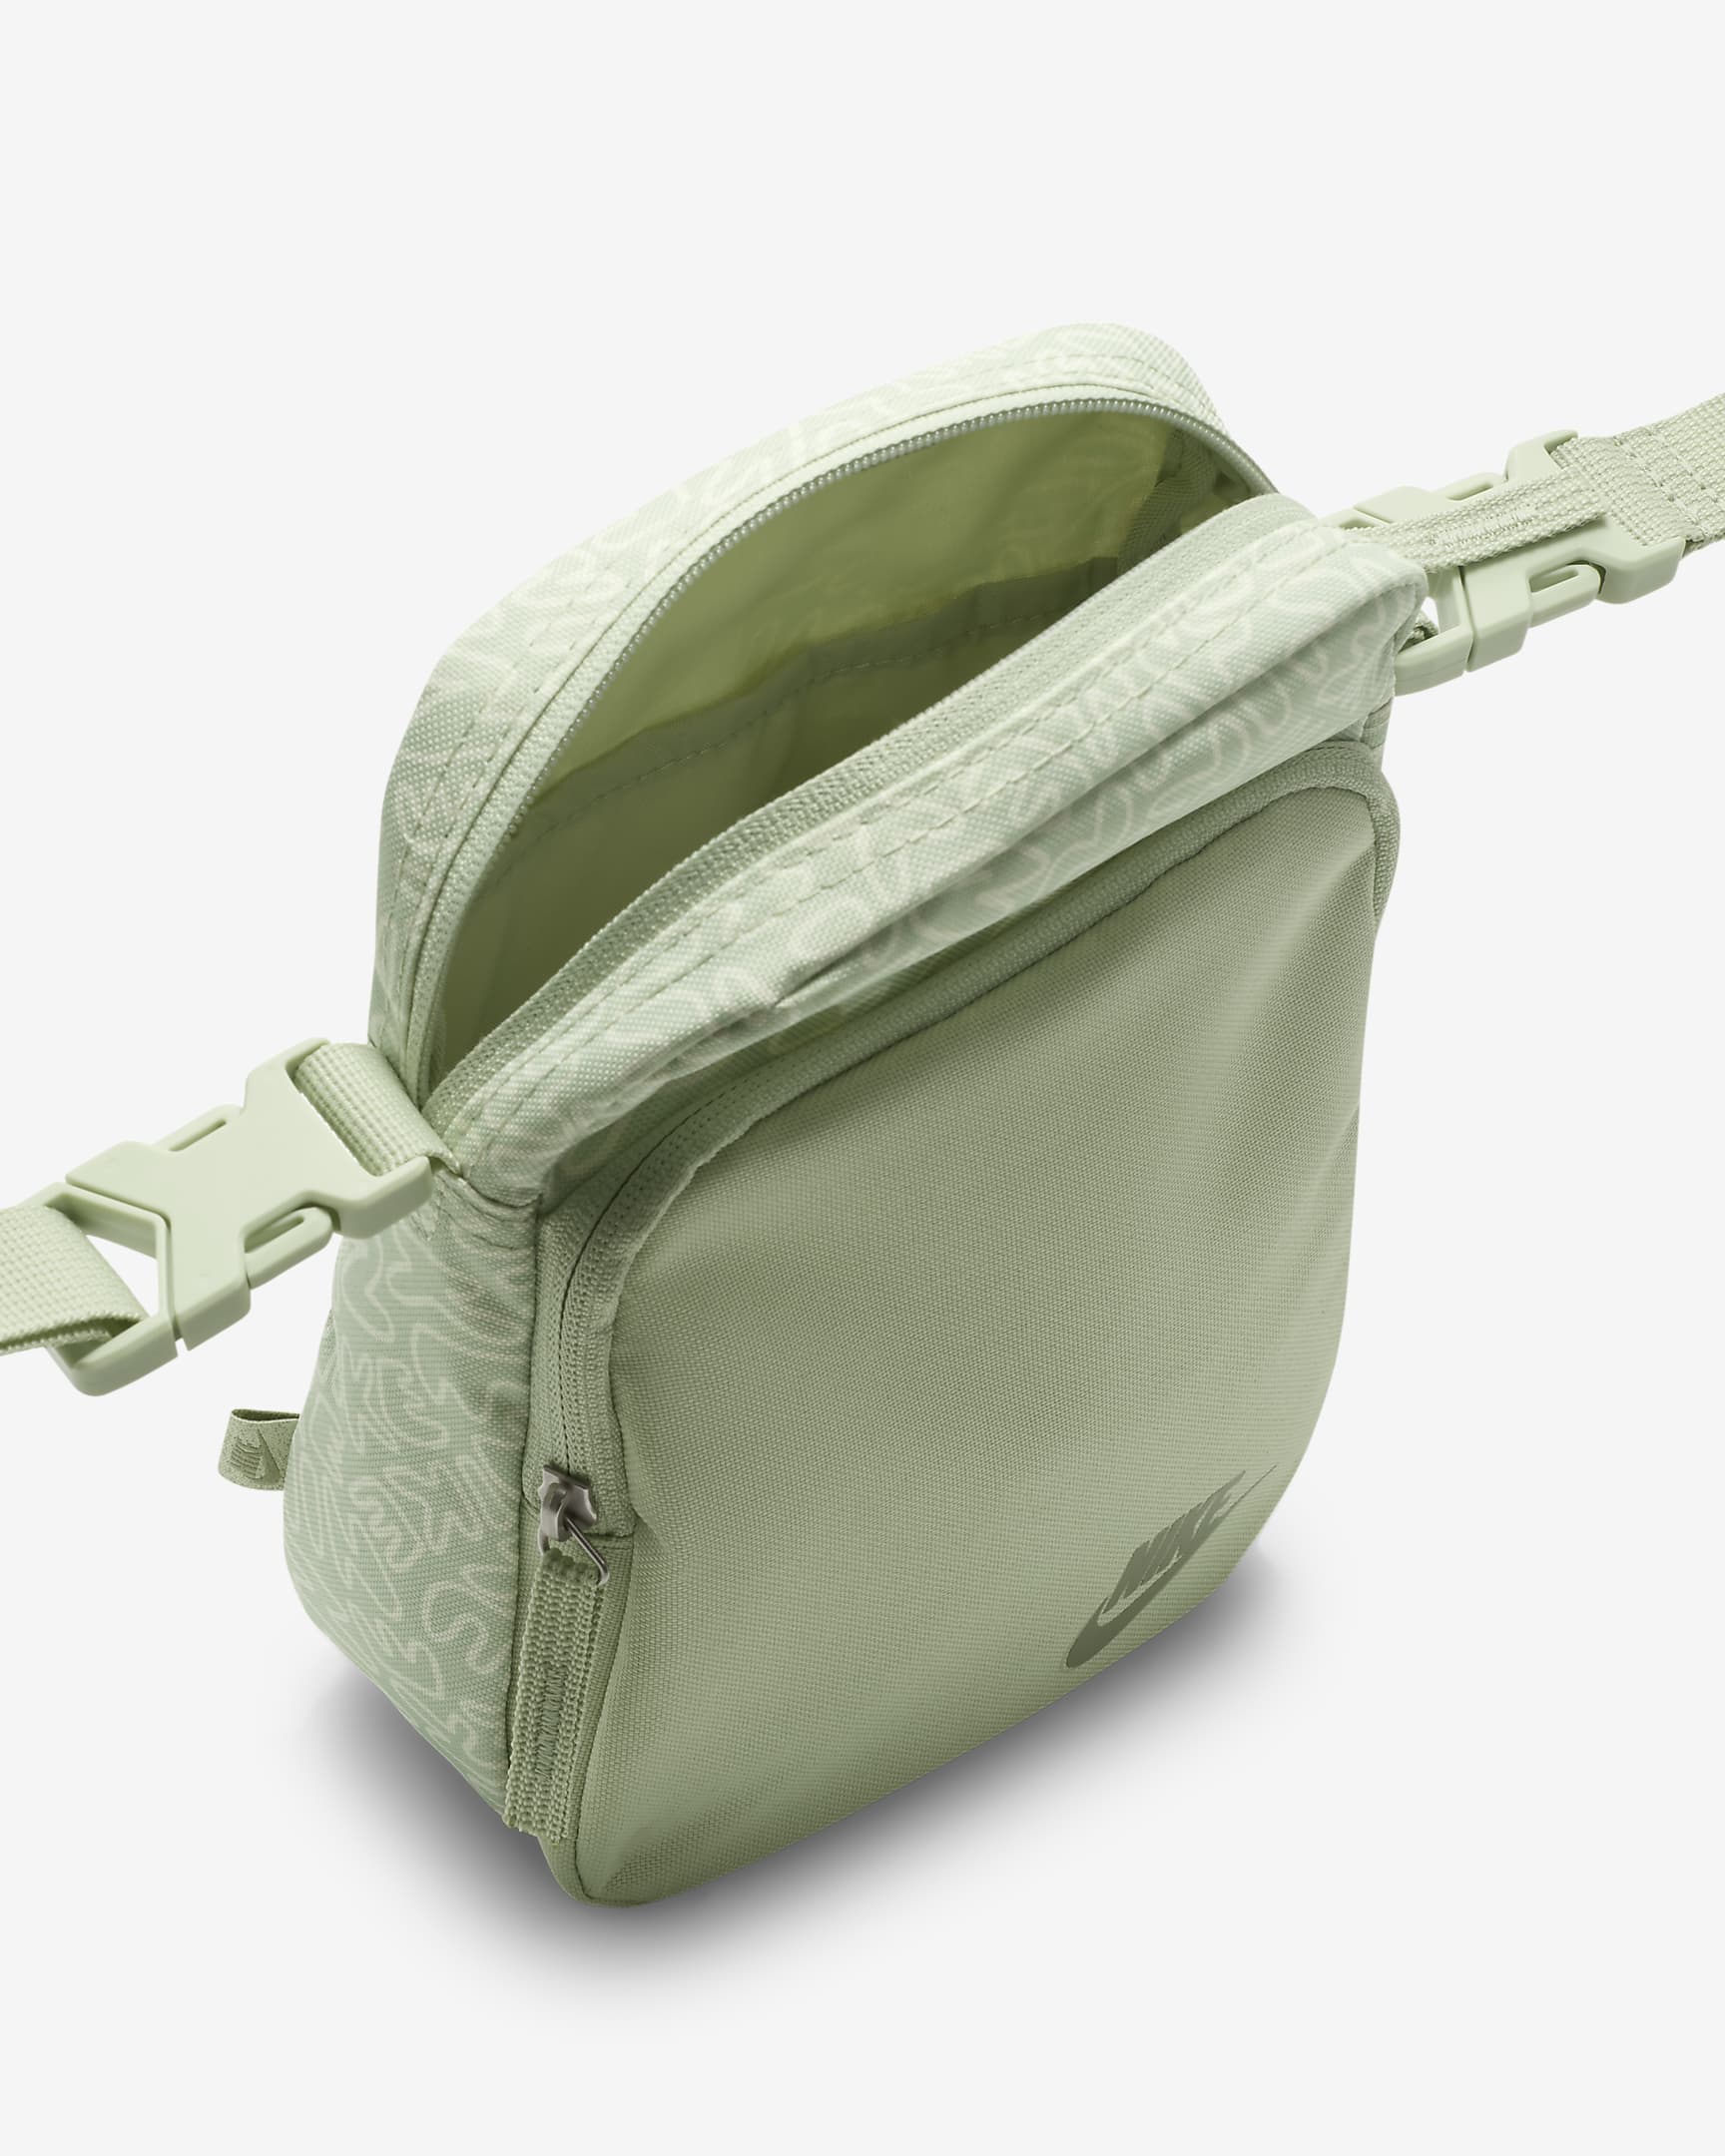 Nike Heritage Cross-Body Bag (4L) - Honeydew/Honeydew/Oil Green